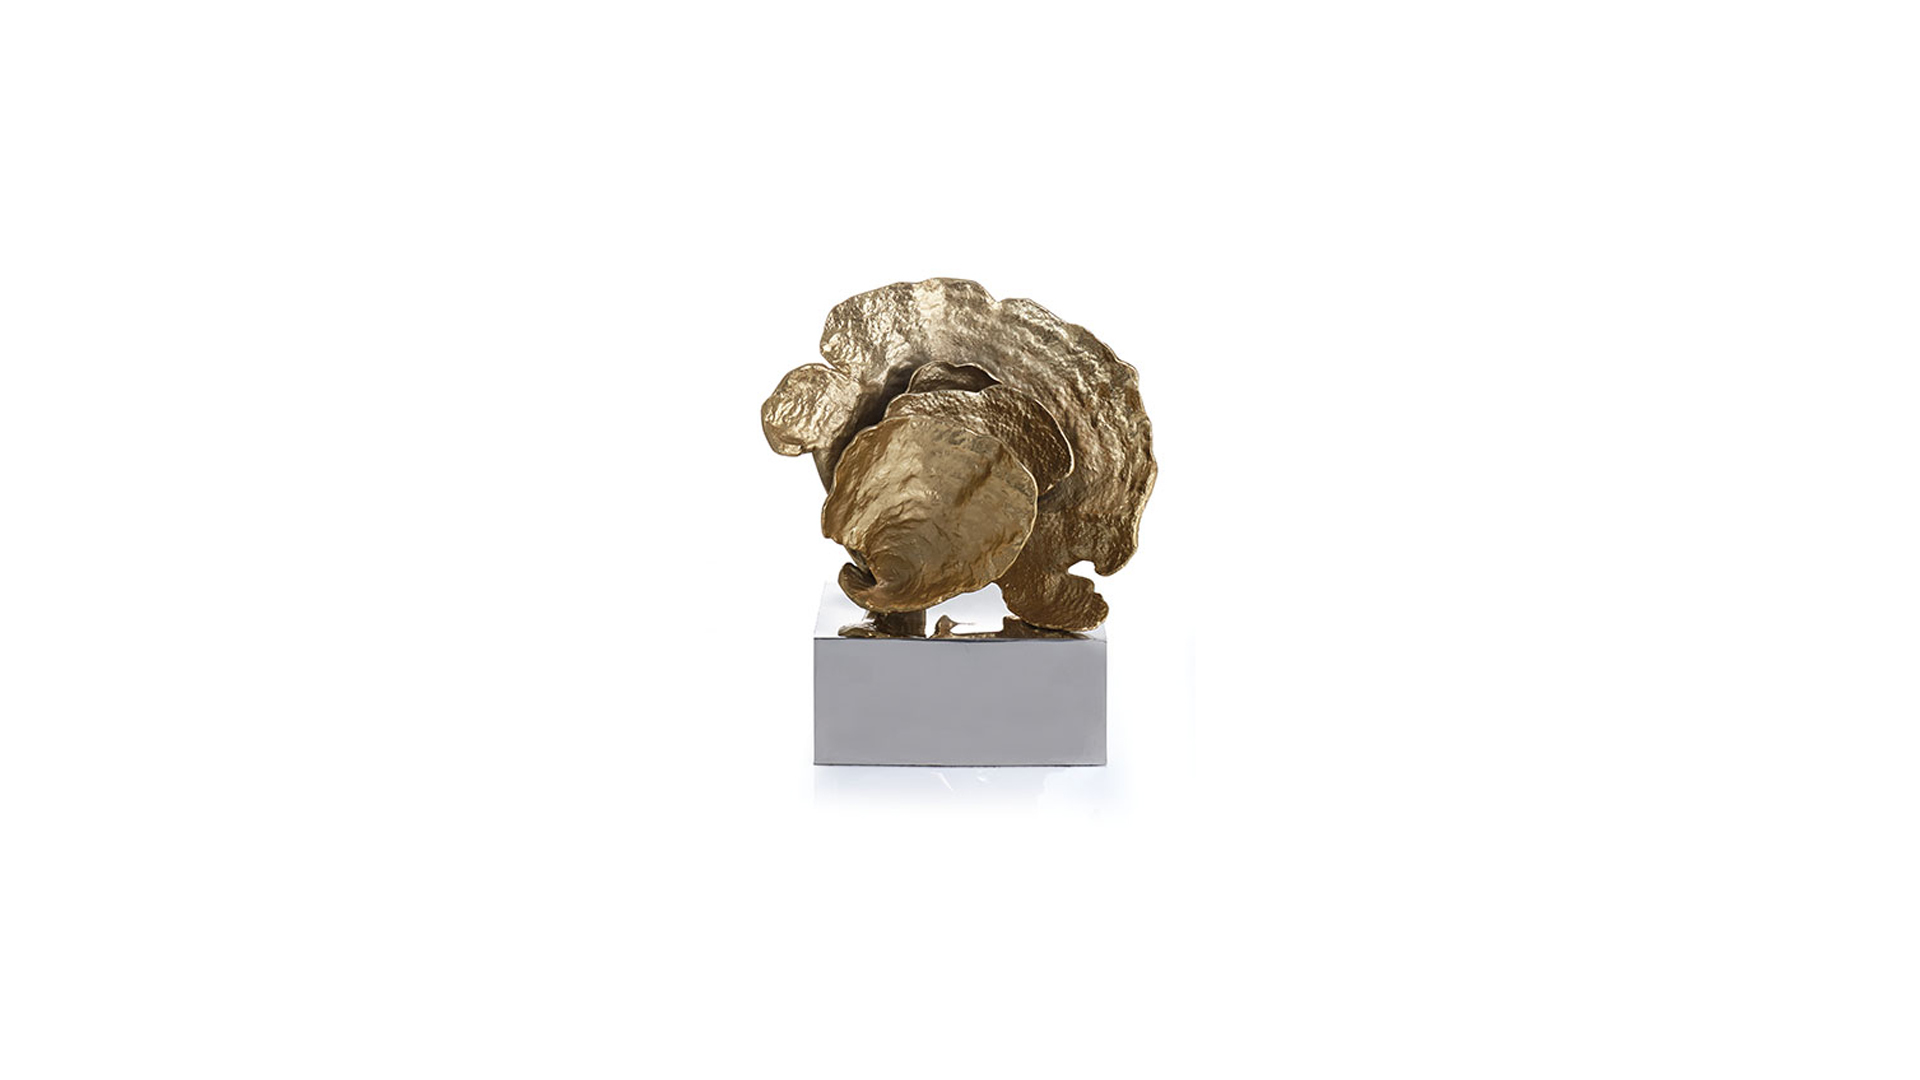 Скульптура Michael Aram Коралл 35 см, 2015г, лимвып 48/500